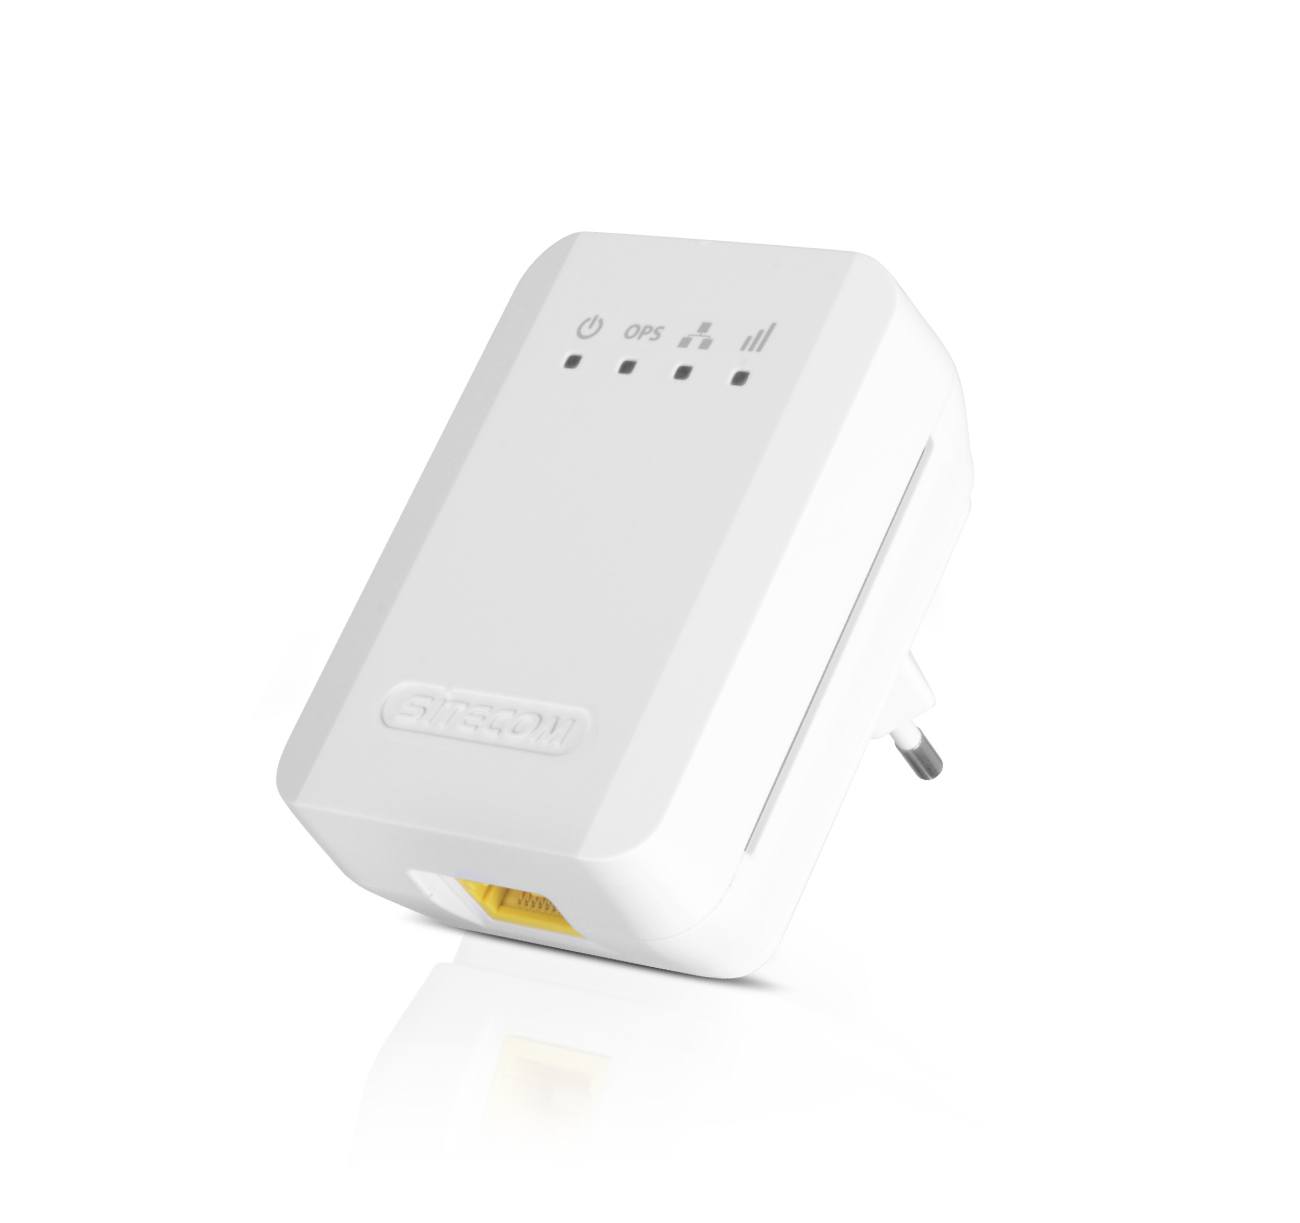 Sitecom Wlx 1000 N300 Wi Fi Range Extender